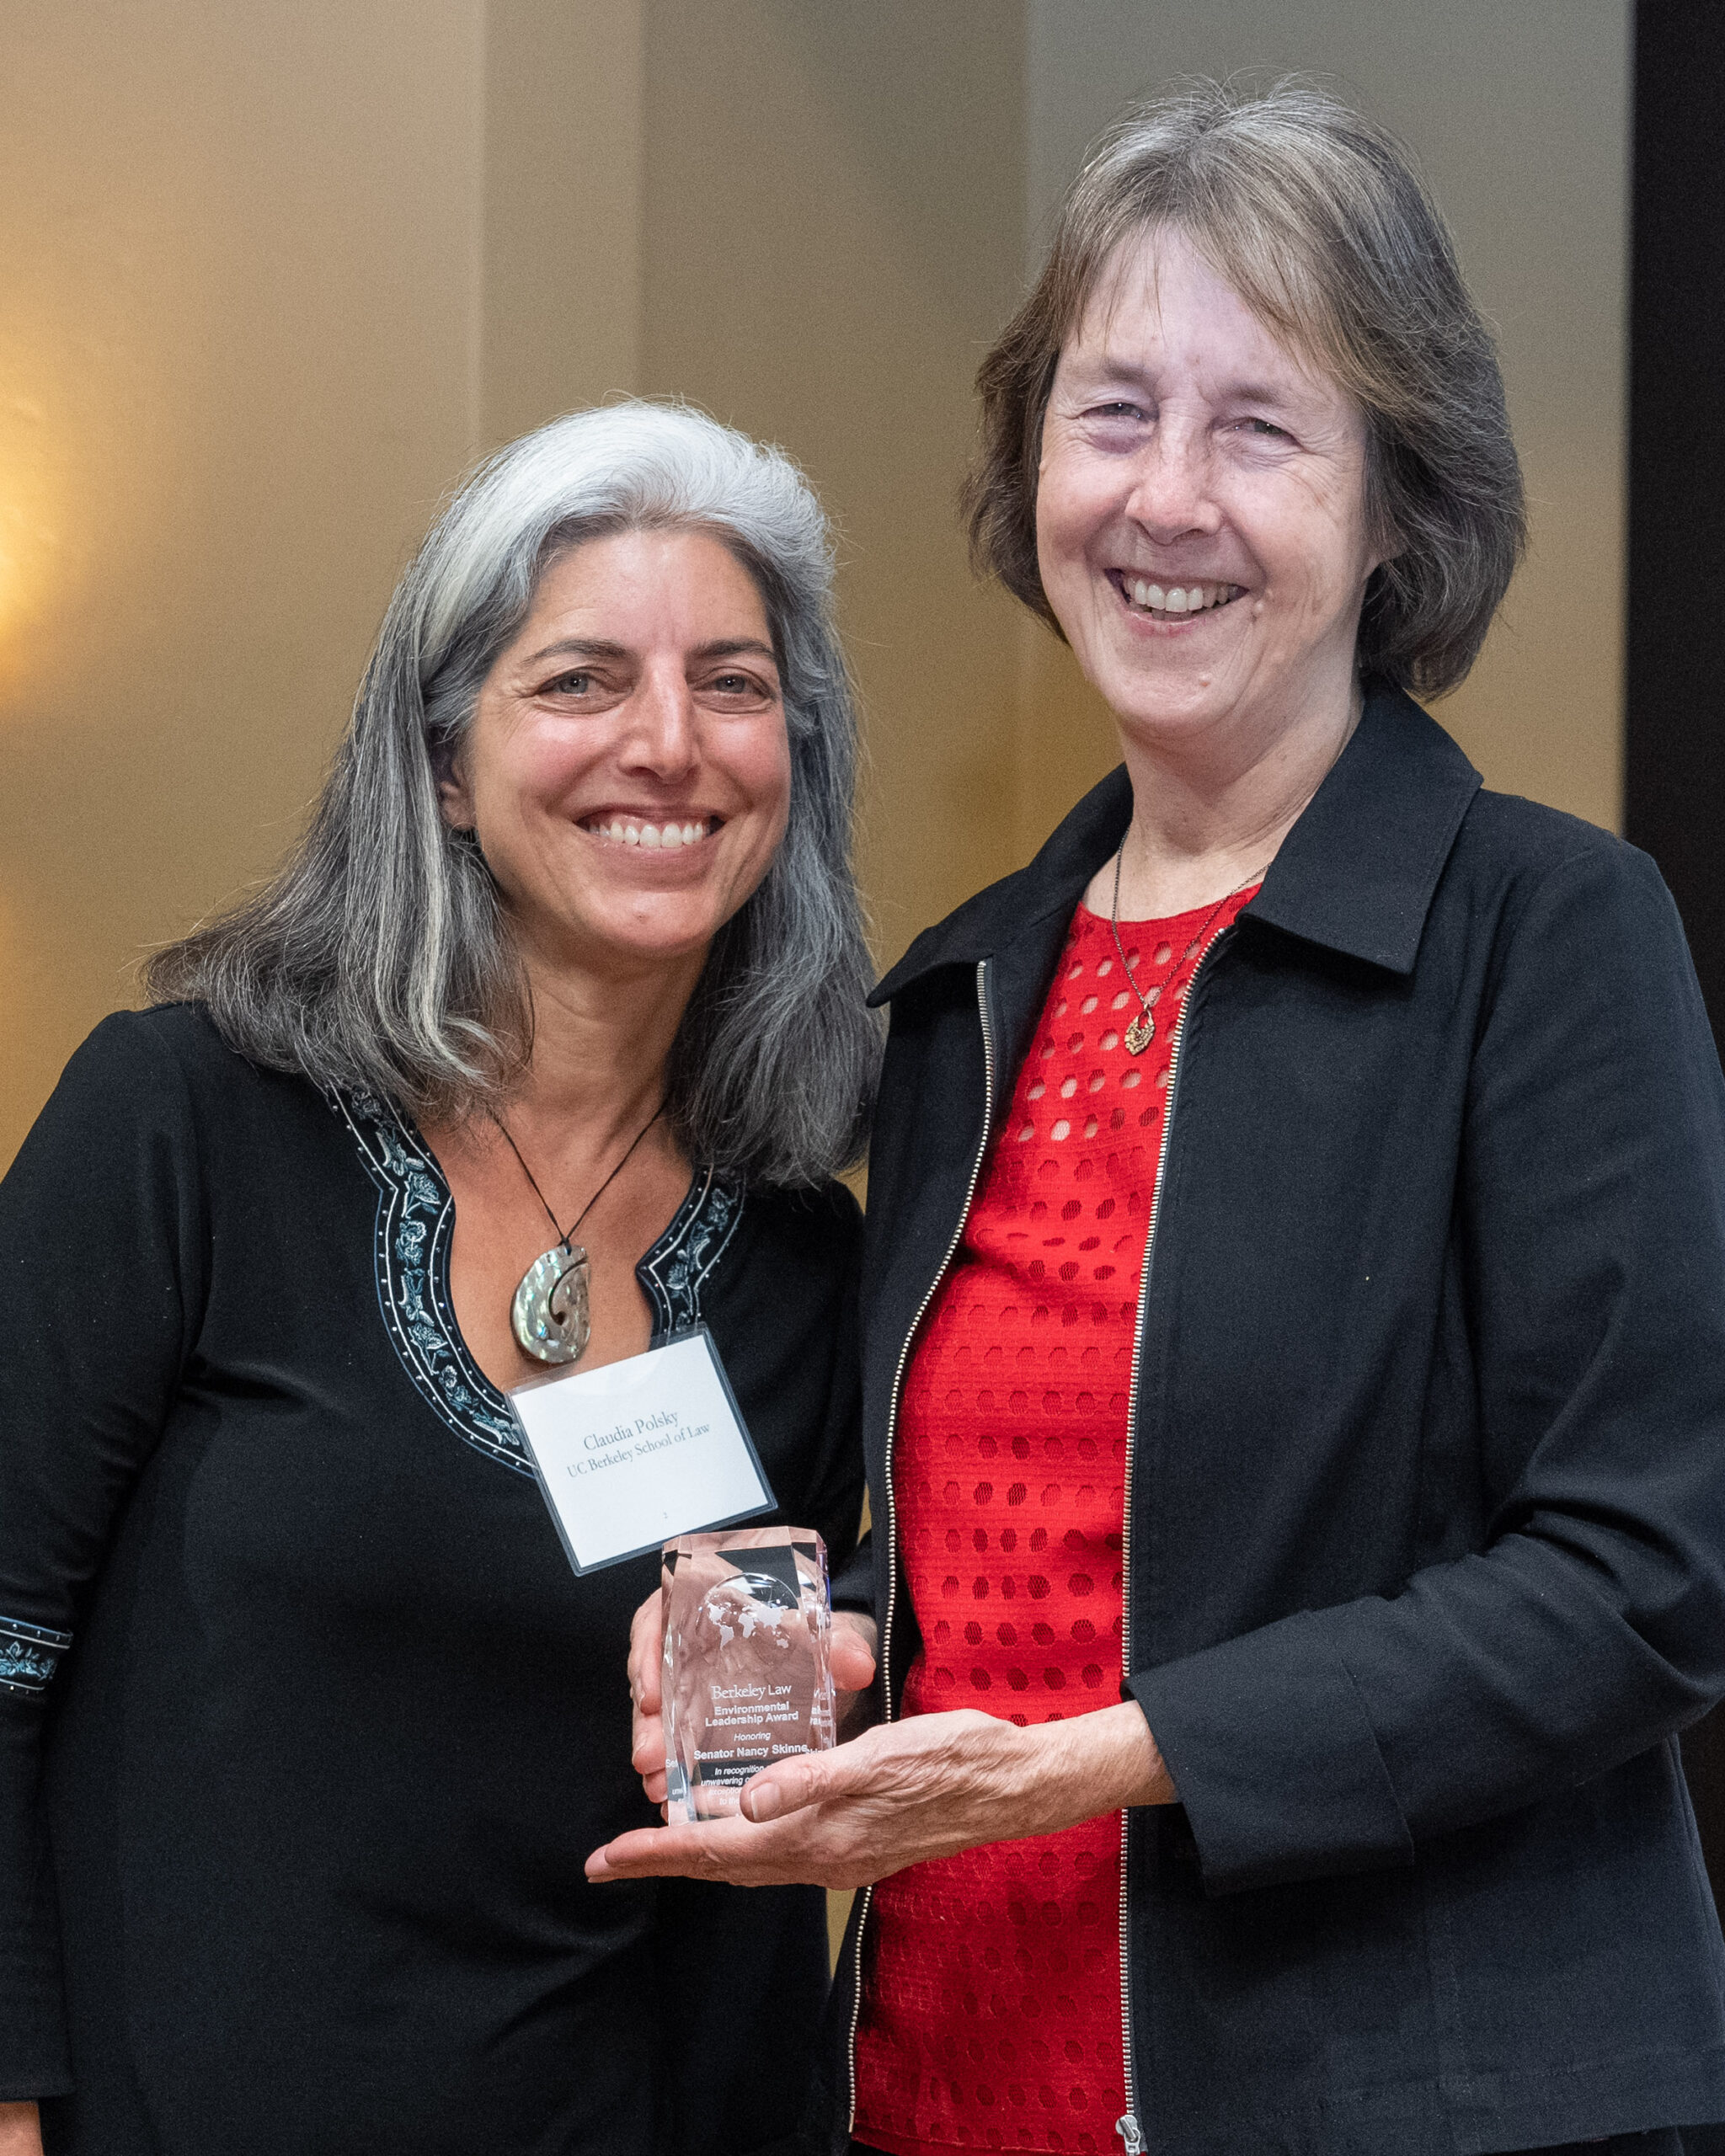 Prof. Claudia Polsky presents the Environmental Leadership Award to Sen. Nancy Skinner